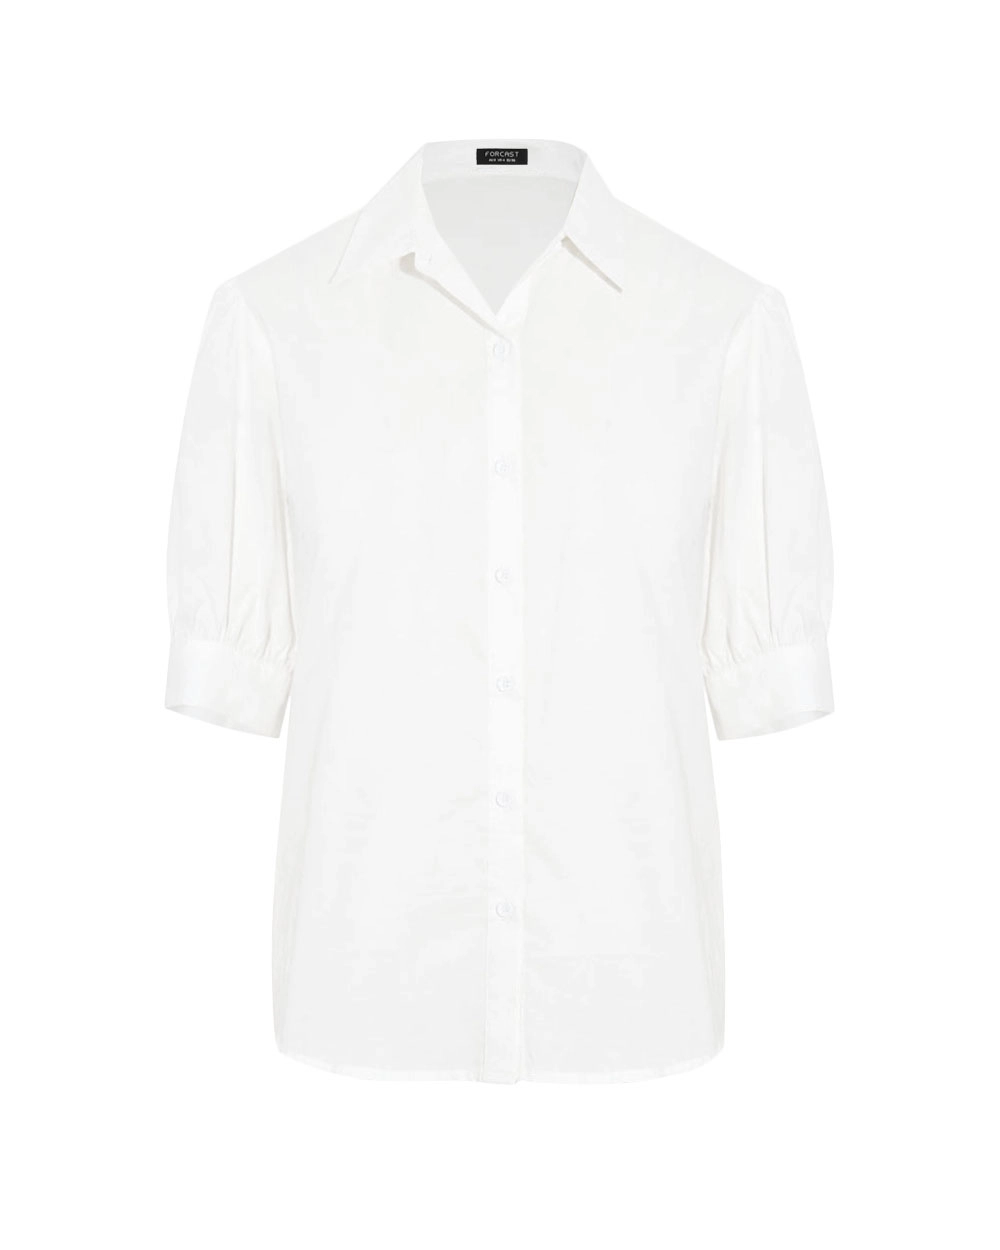 Darla 3/4 Length Sleeve Collared Shirt